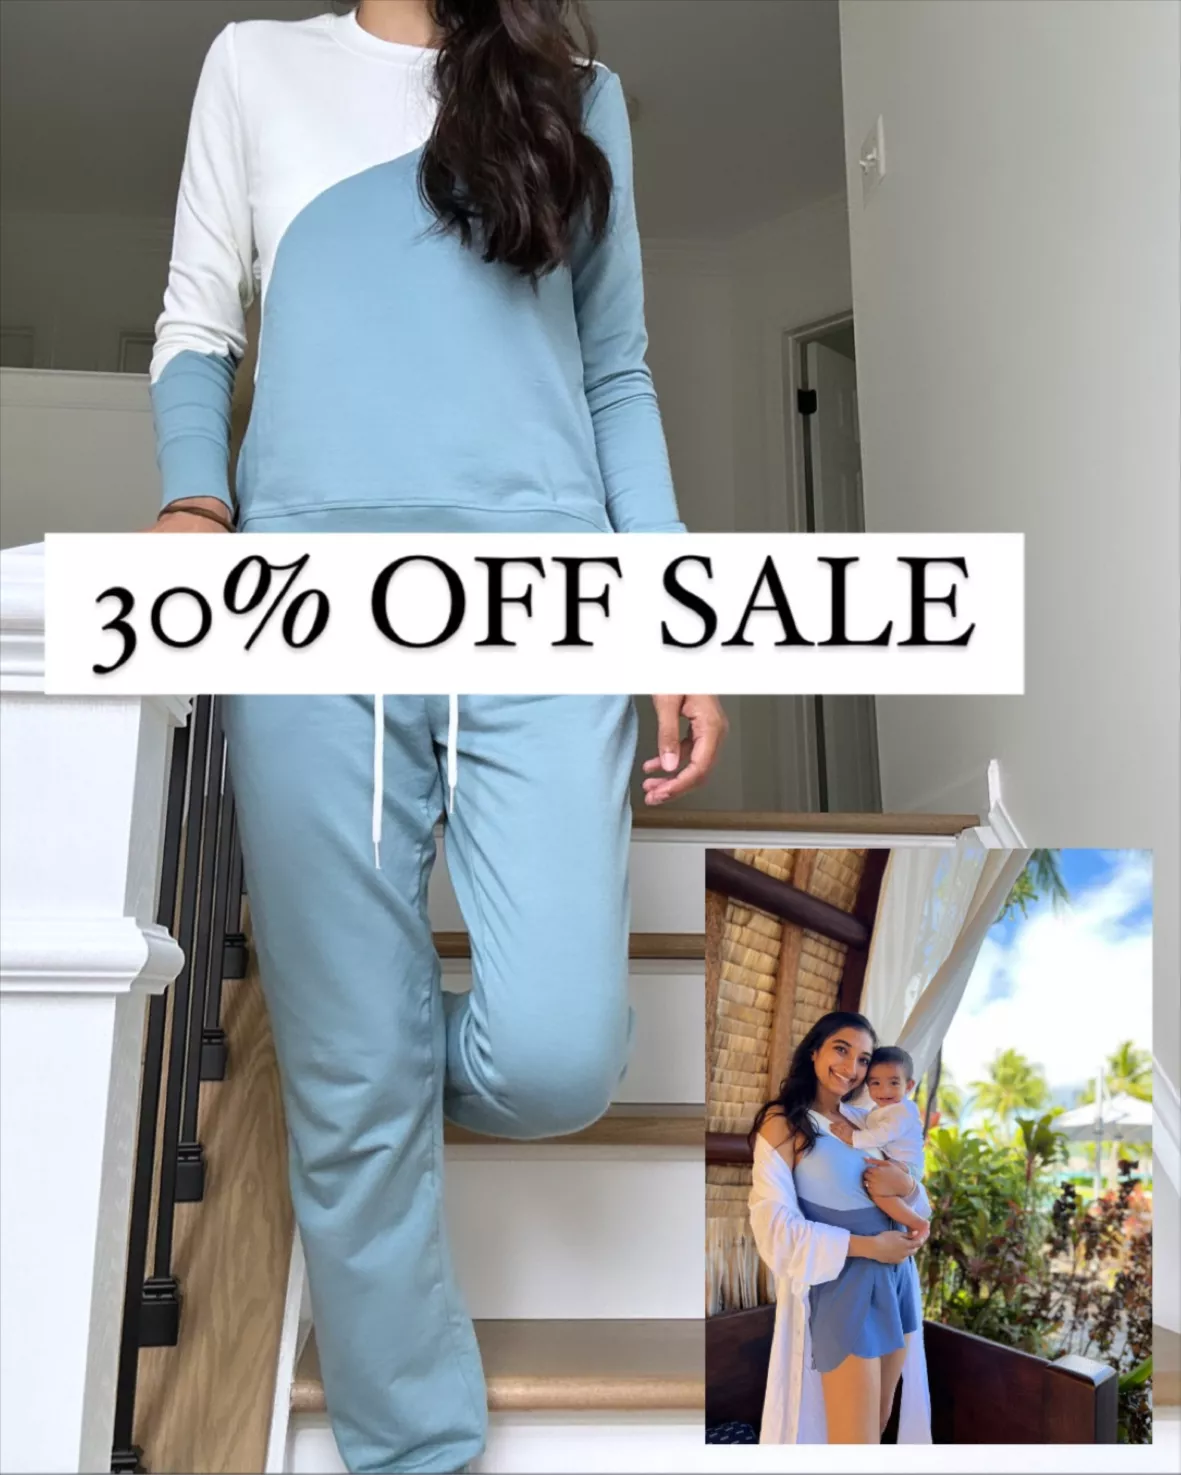 The Luxe Pima Pleated Pajama Pants Set